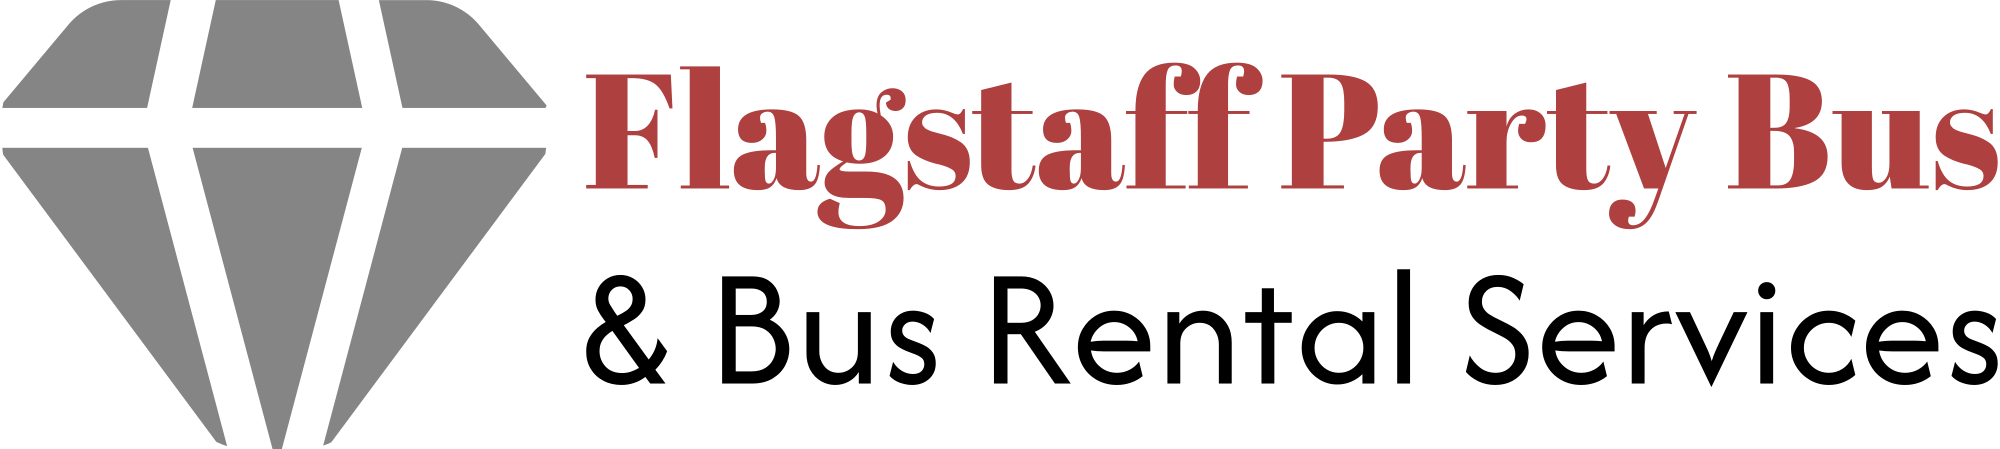 Party Bus Flagstaff logo